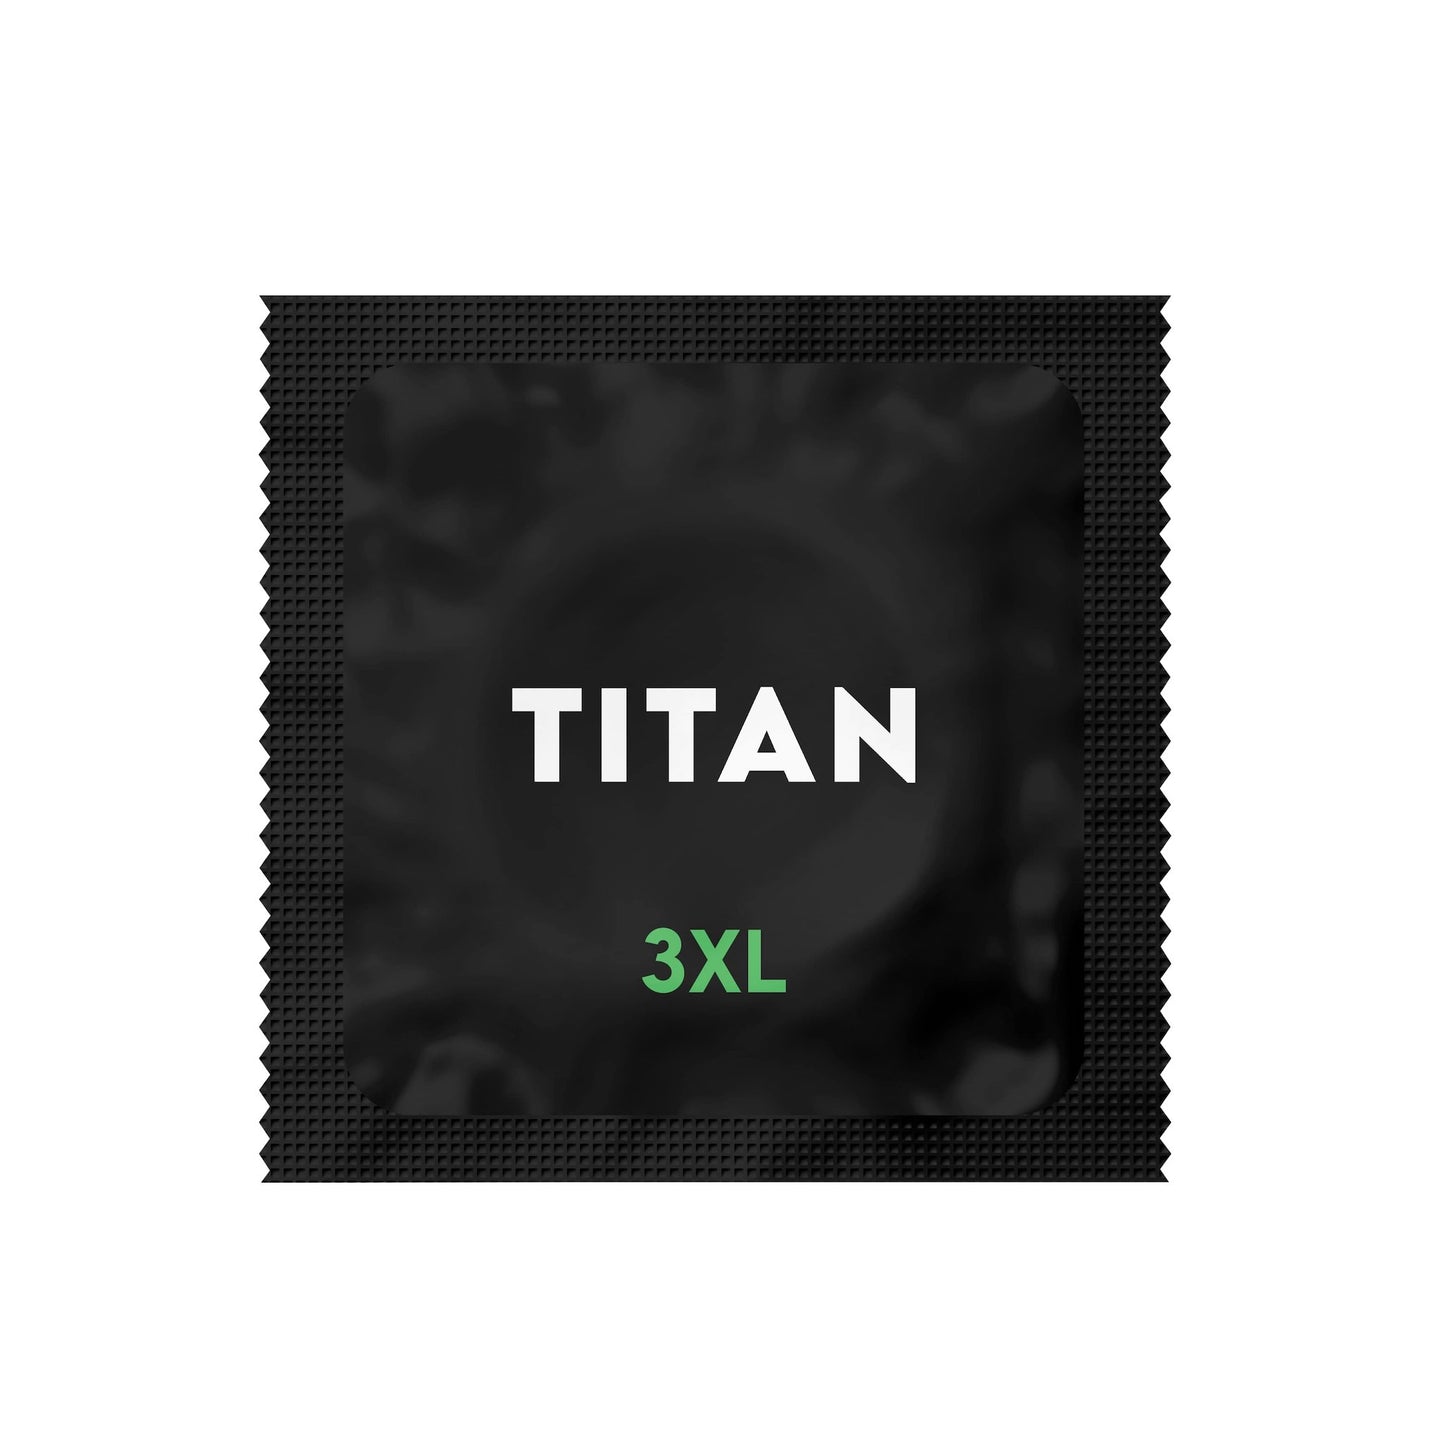 TITAN 3XL